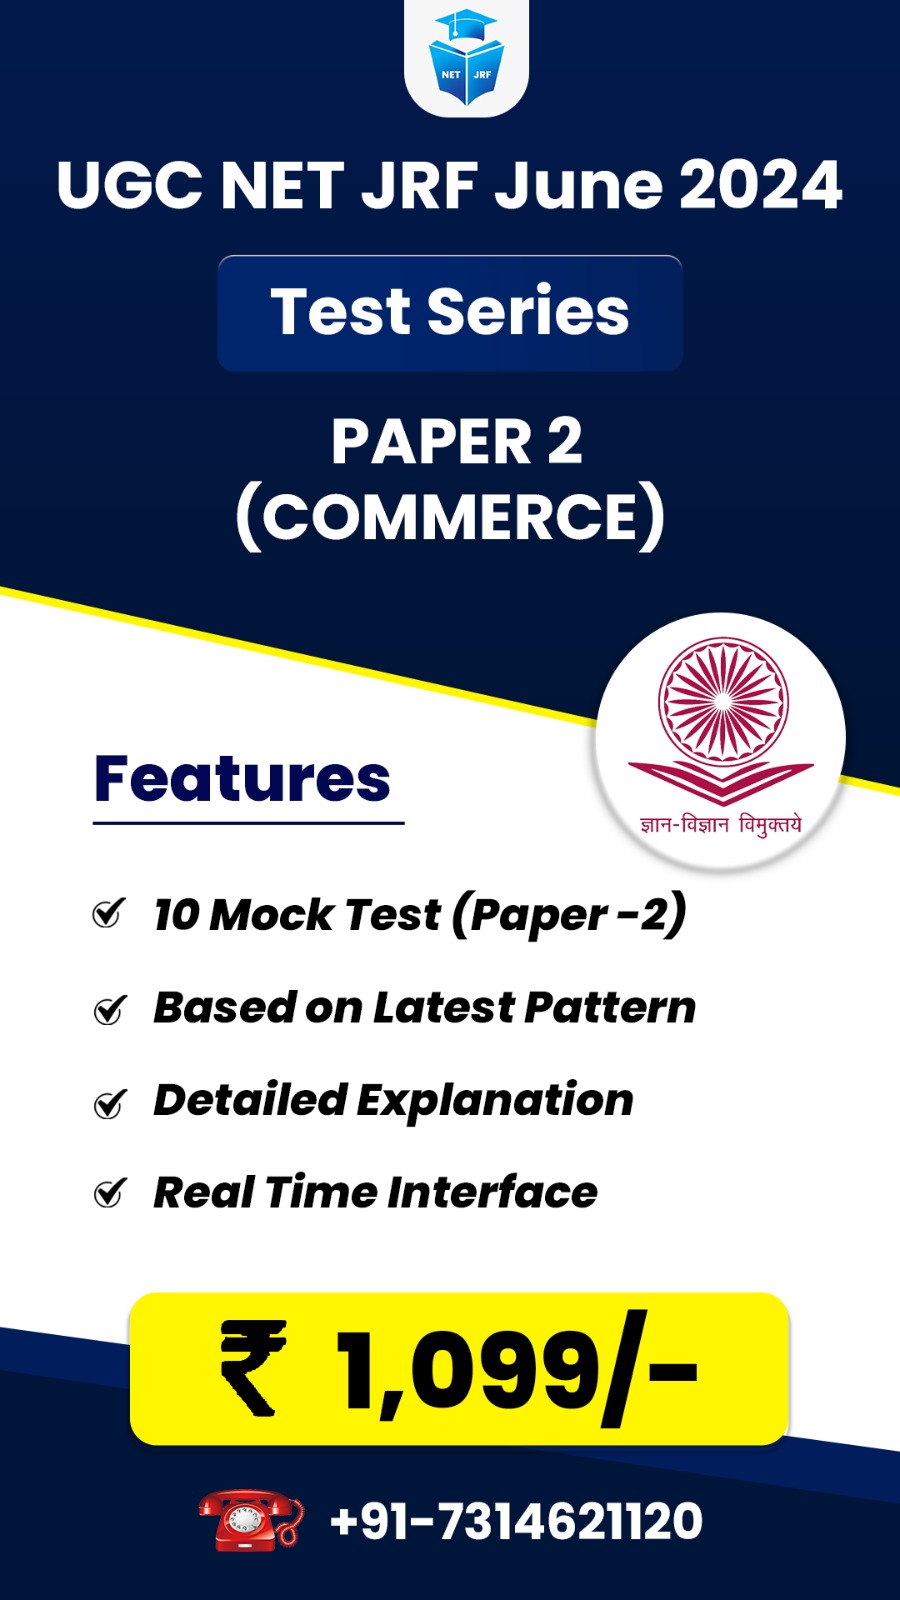 Commerce (Paper 2) Test Series for June 2024